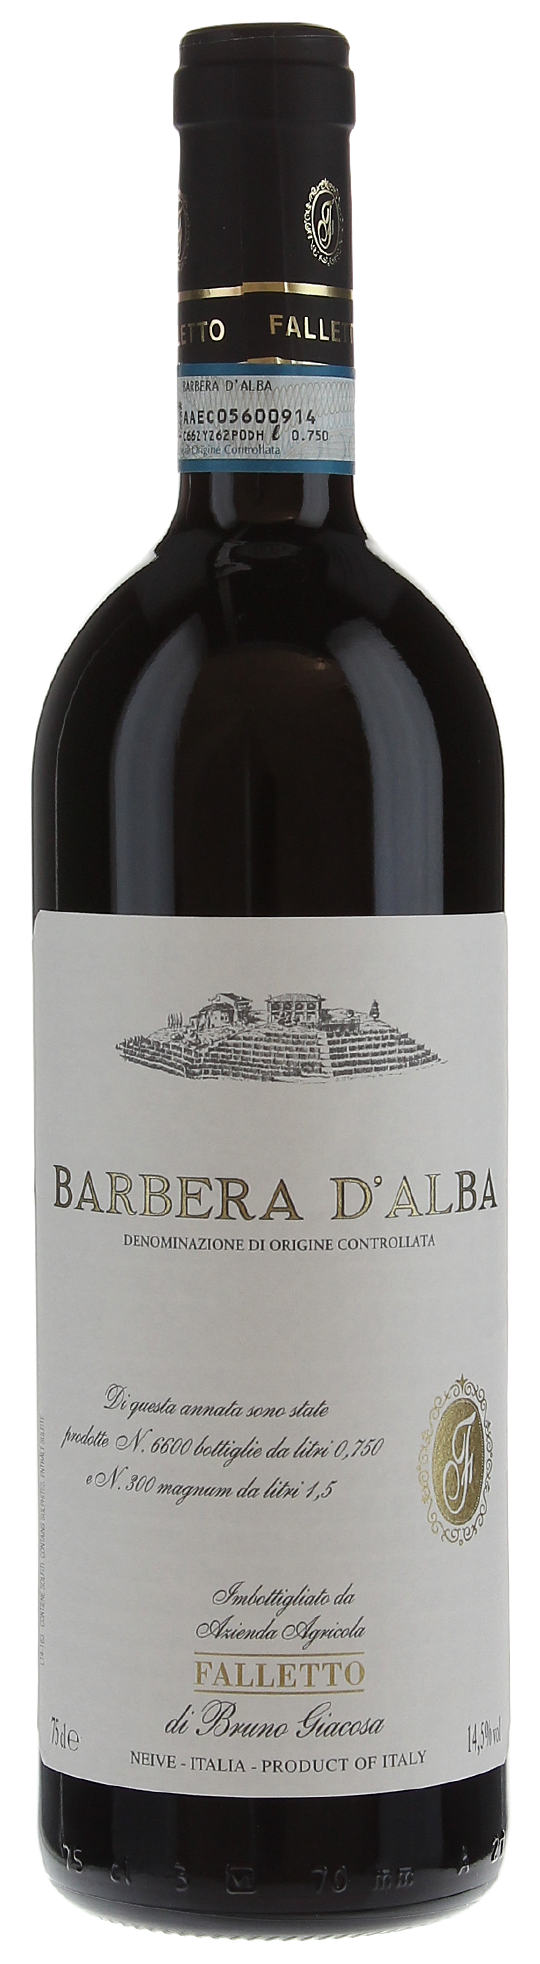 Bottle shot of 2017 Barbera d'Alba